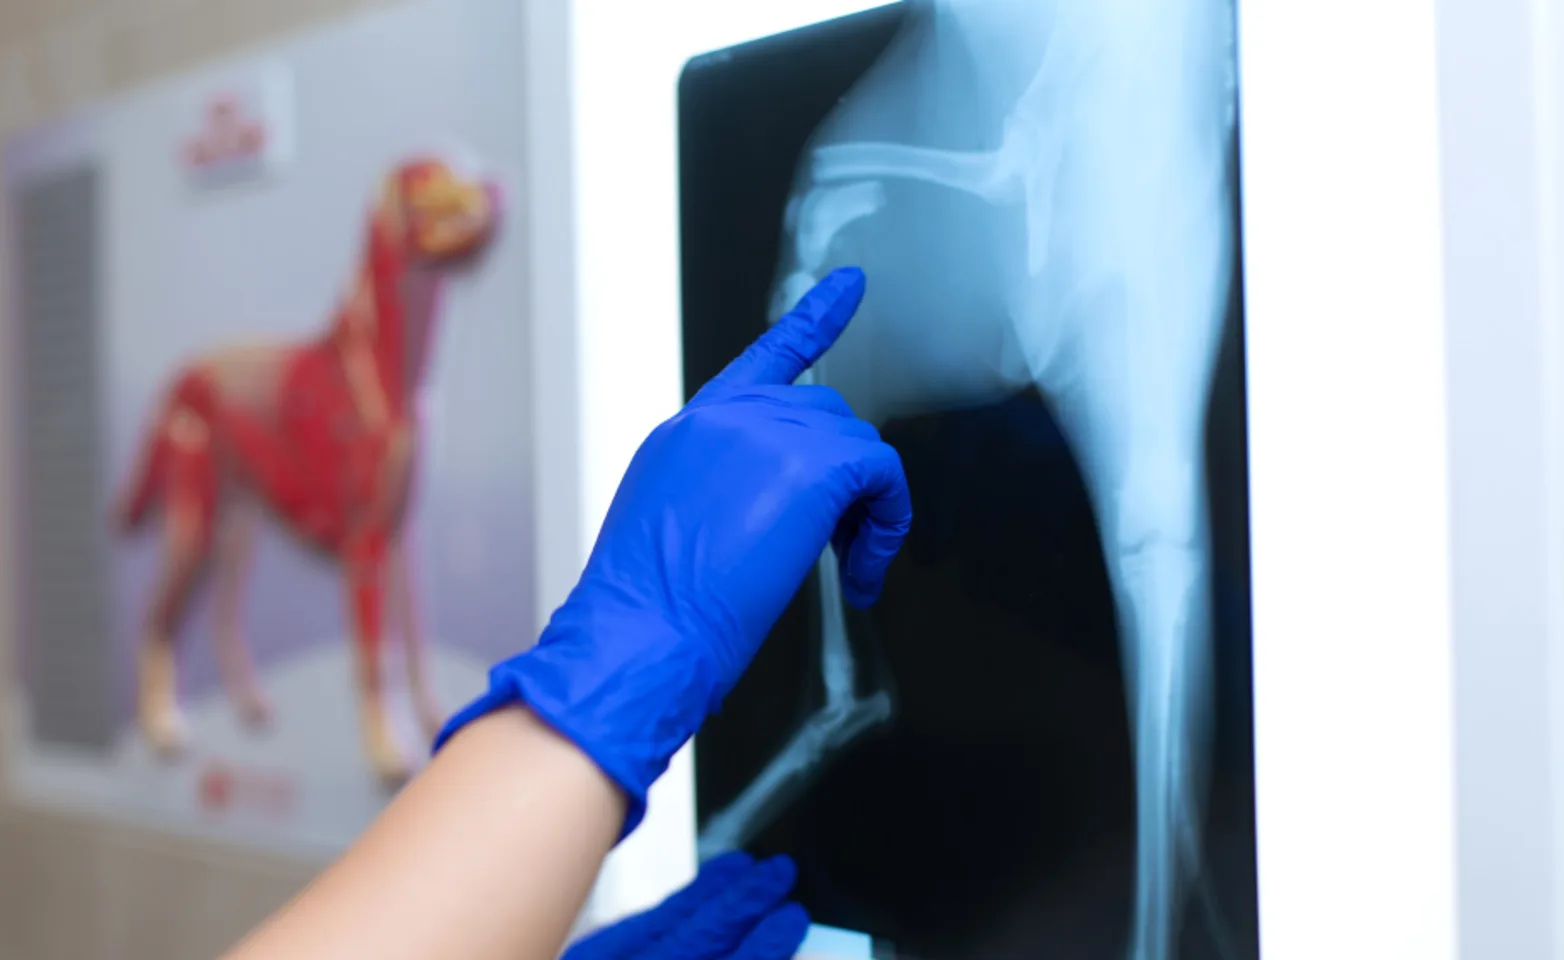 Veterinarian examining a dog's x-ray images